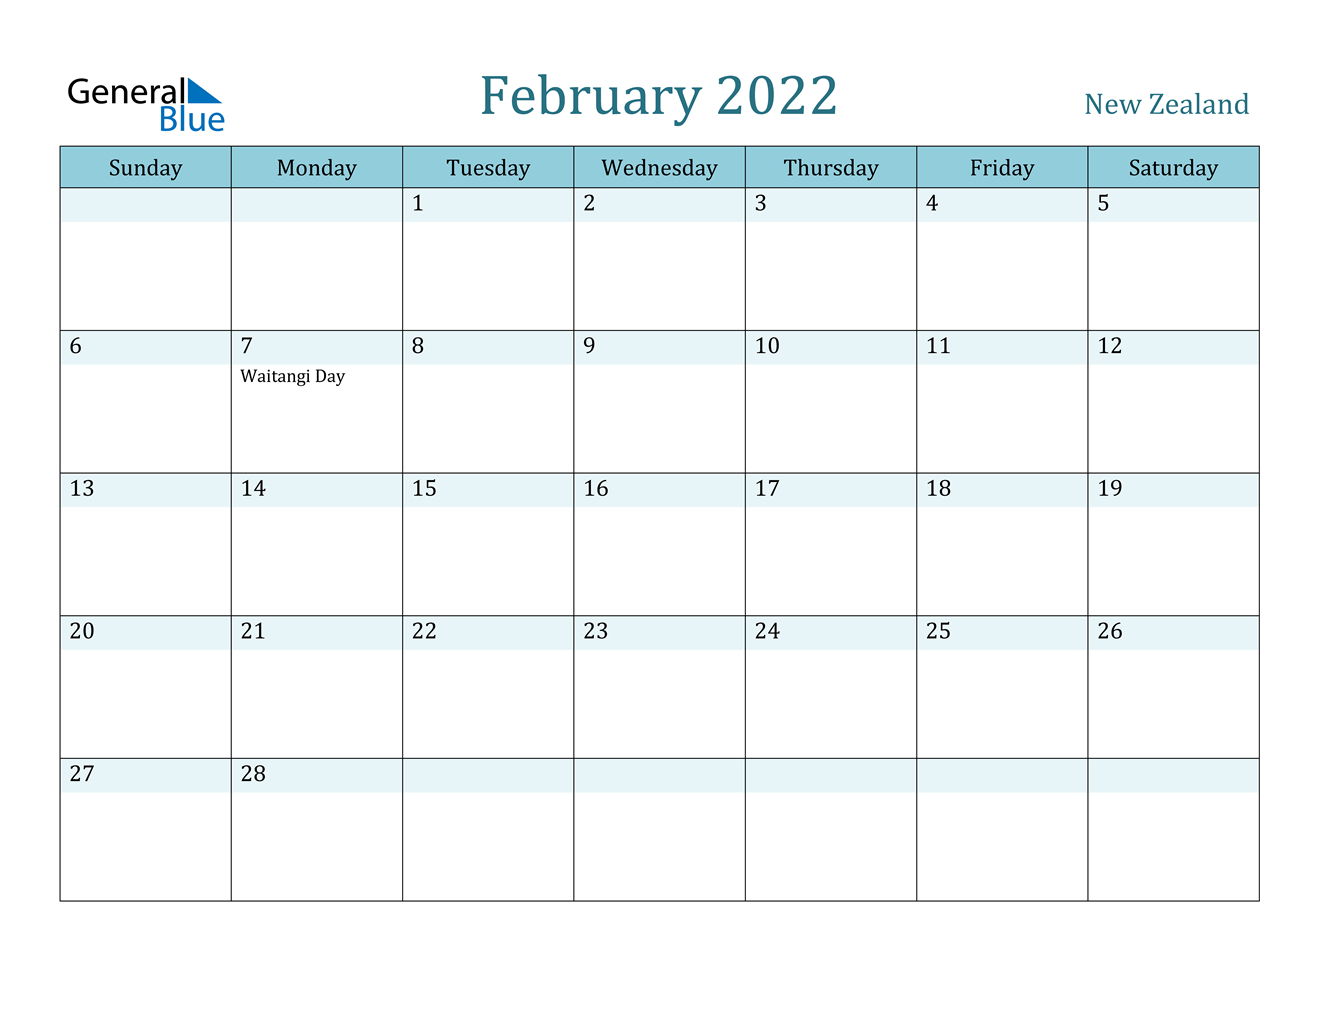 Get Calendar 2022 January And February